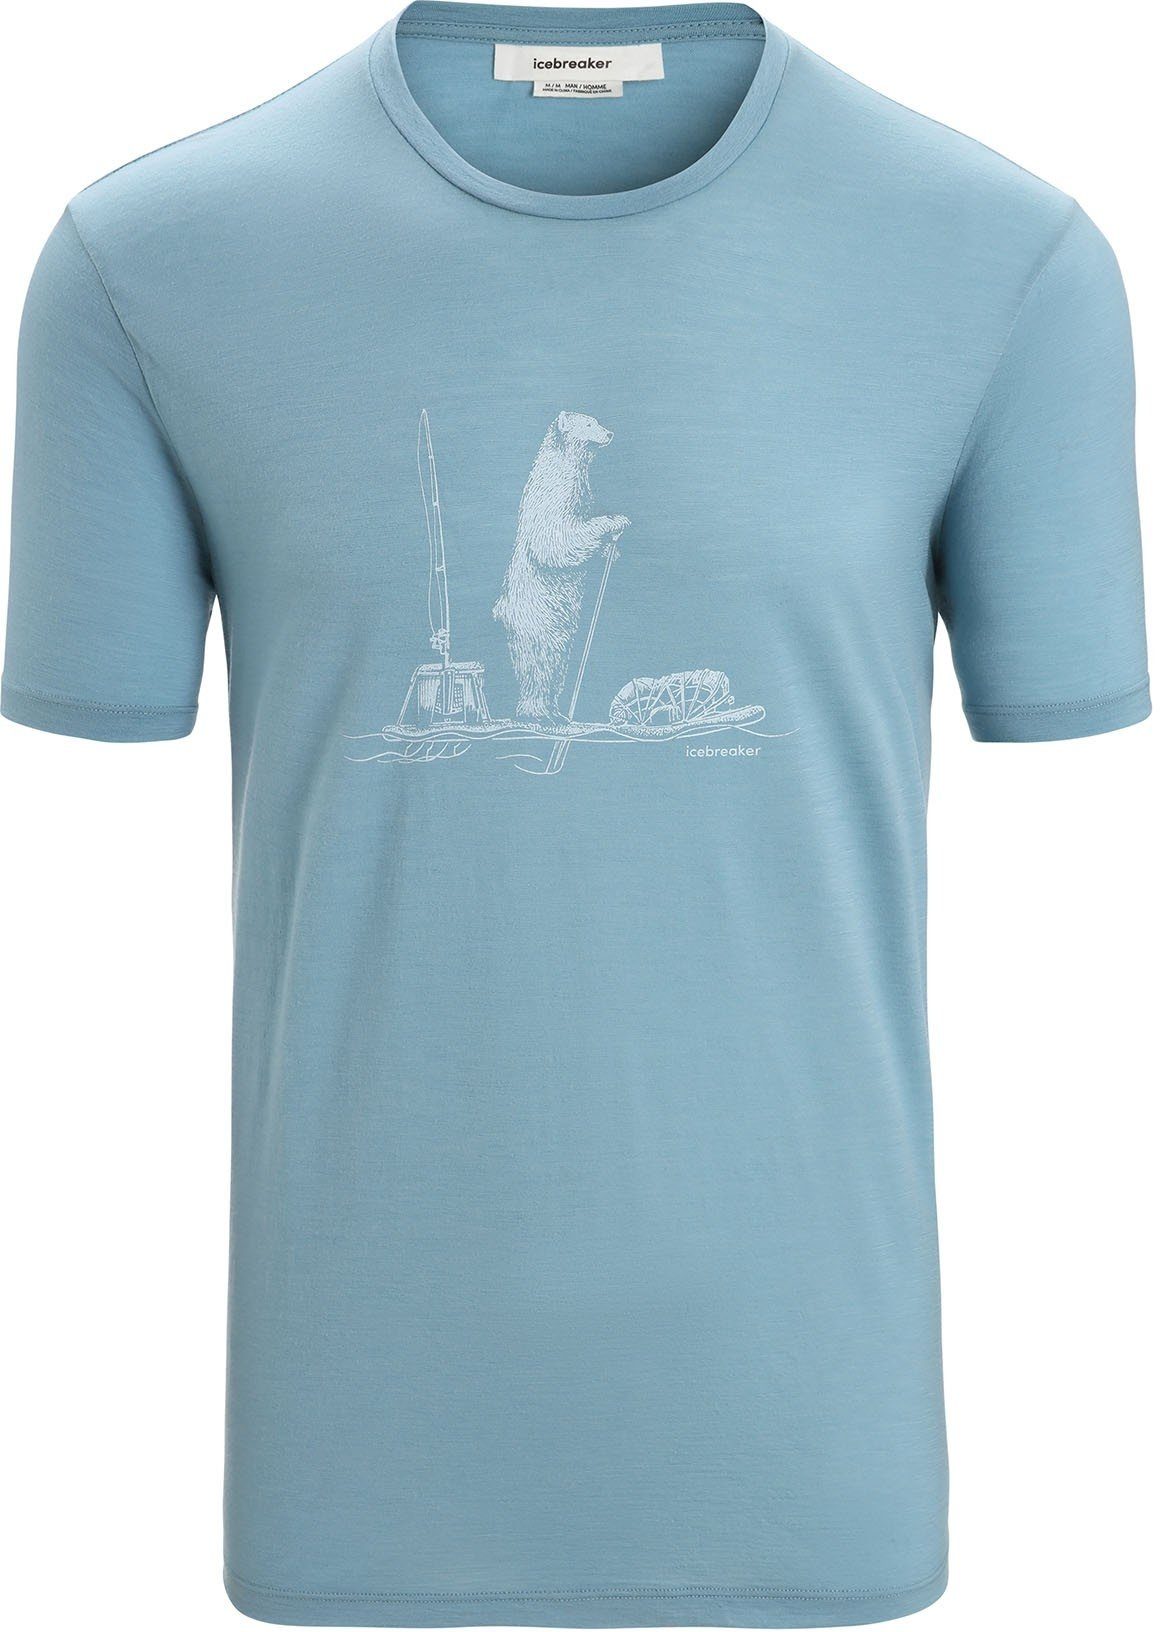 SS II Icebreaker blue T-Shirt Tech astral Tee Polar Paddle Lite